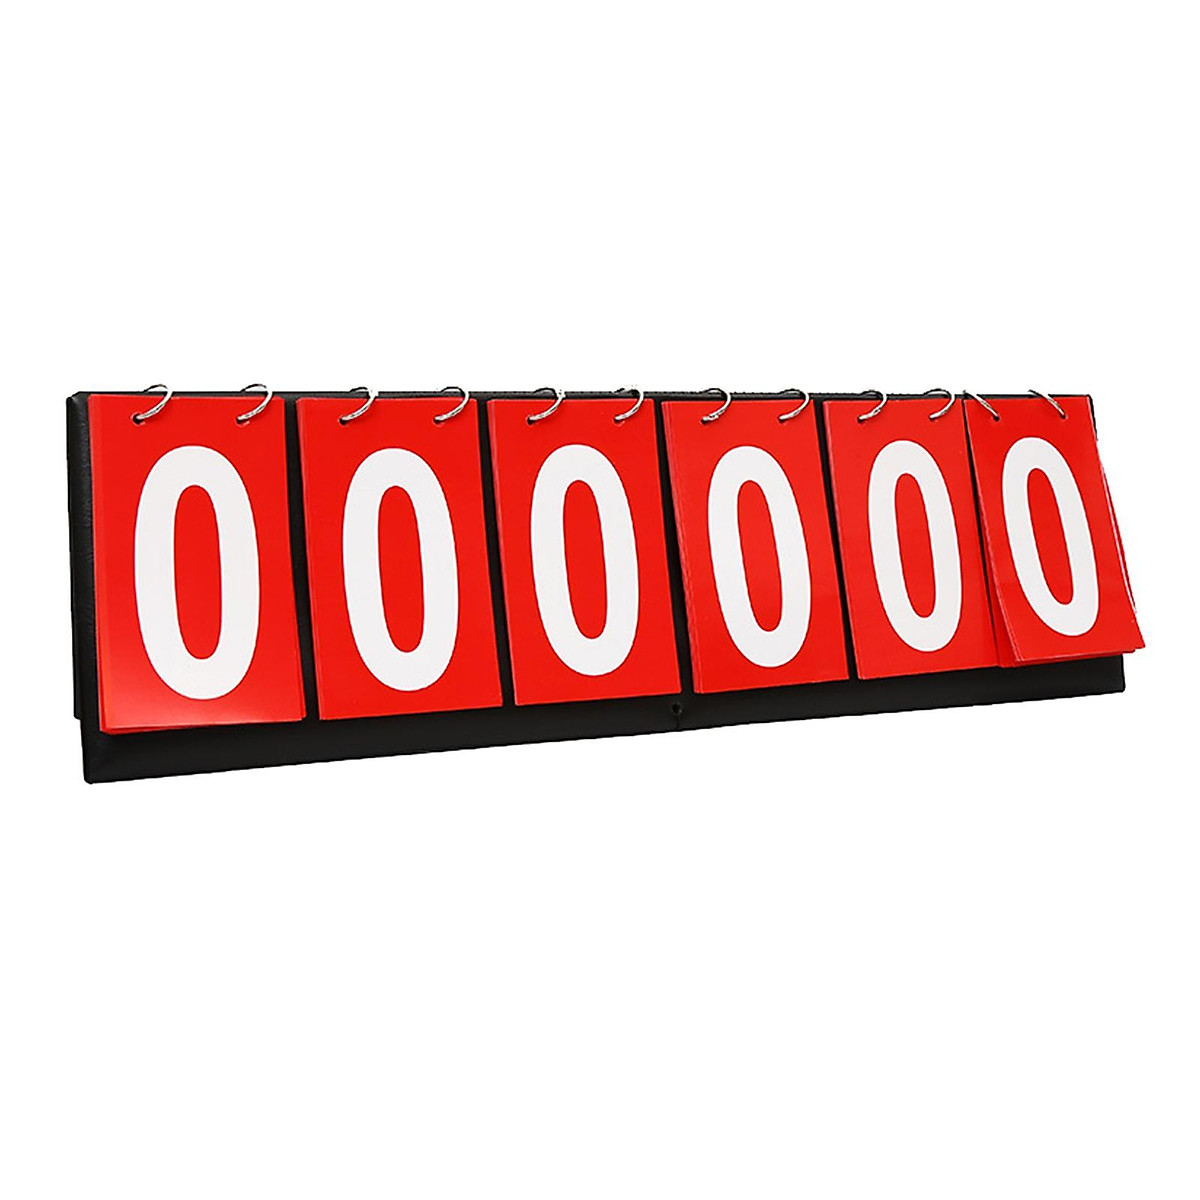 Score Counter Flip Scoreboard Flip Score Board Red - Các Môn Thể Thao Đồng  Đội